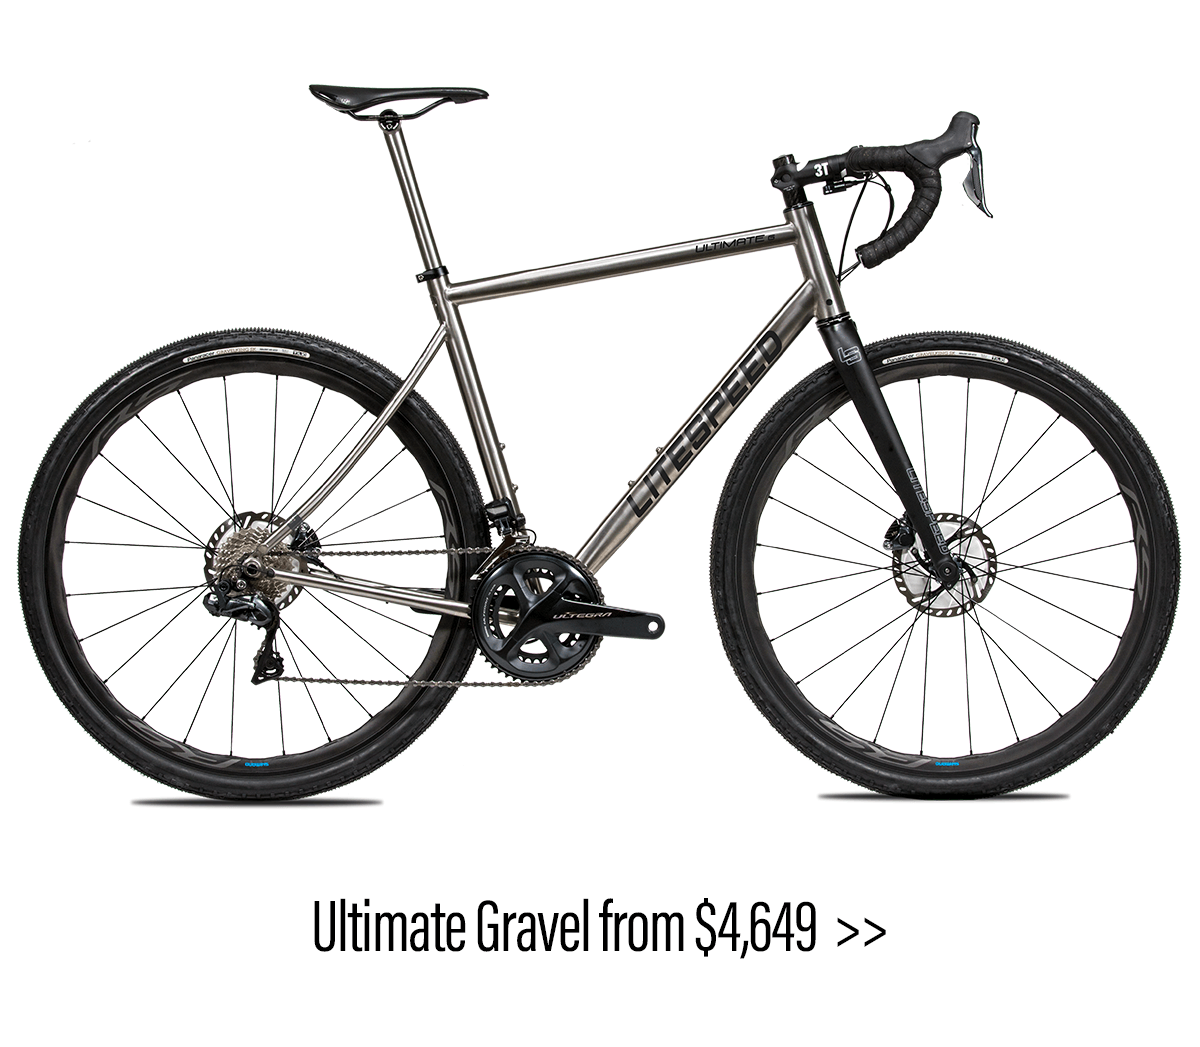 Ultimate Gravel bikes from $4,649.